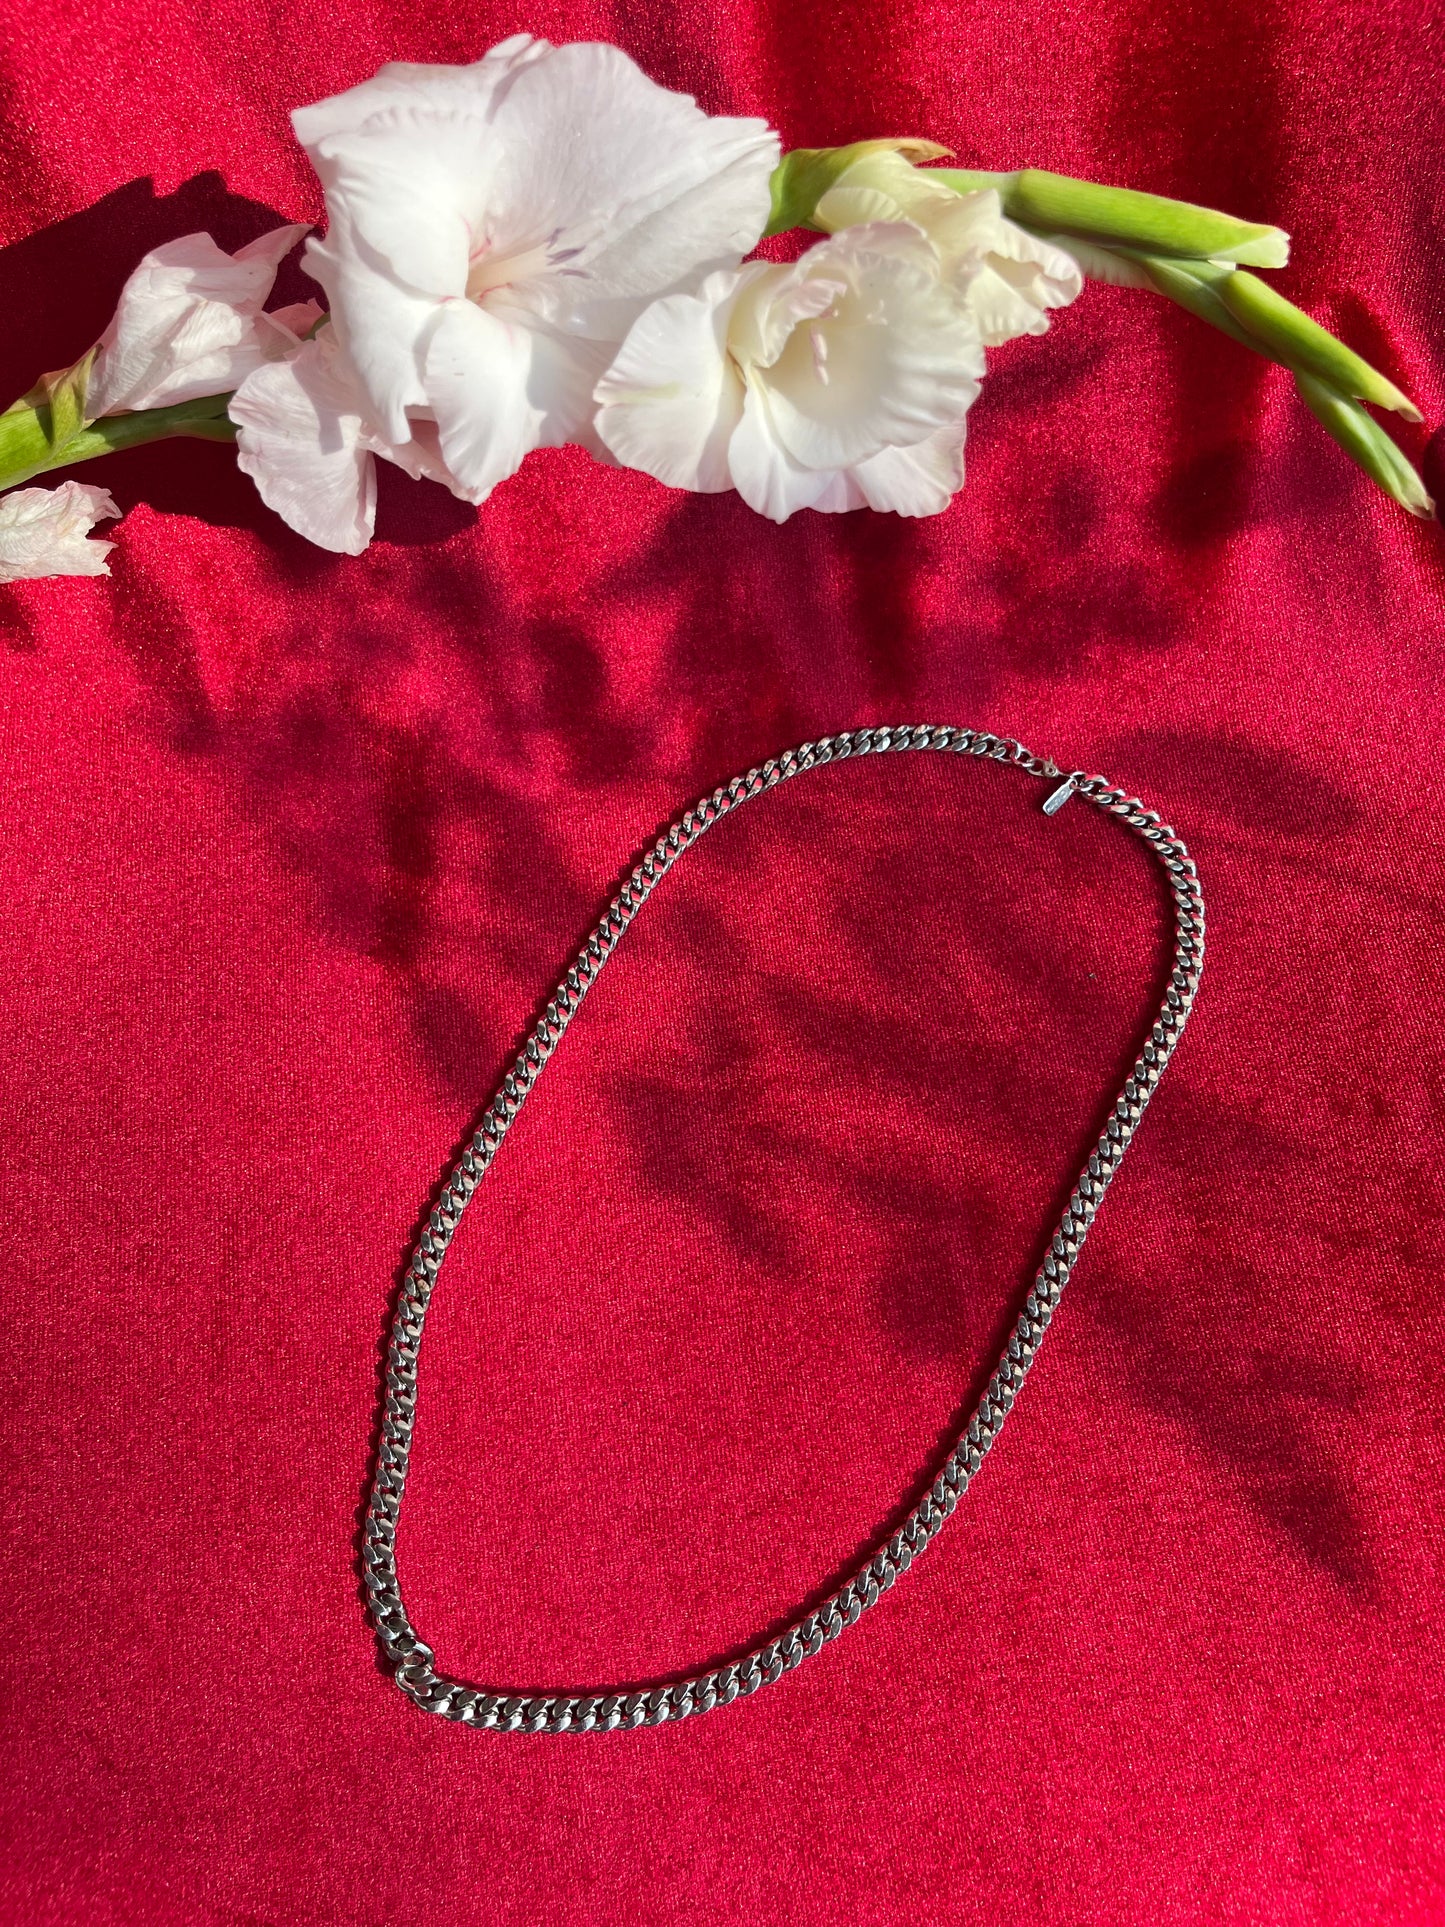 Monet Vintage Silver Tone Necklace